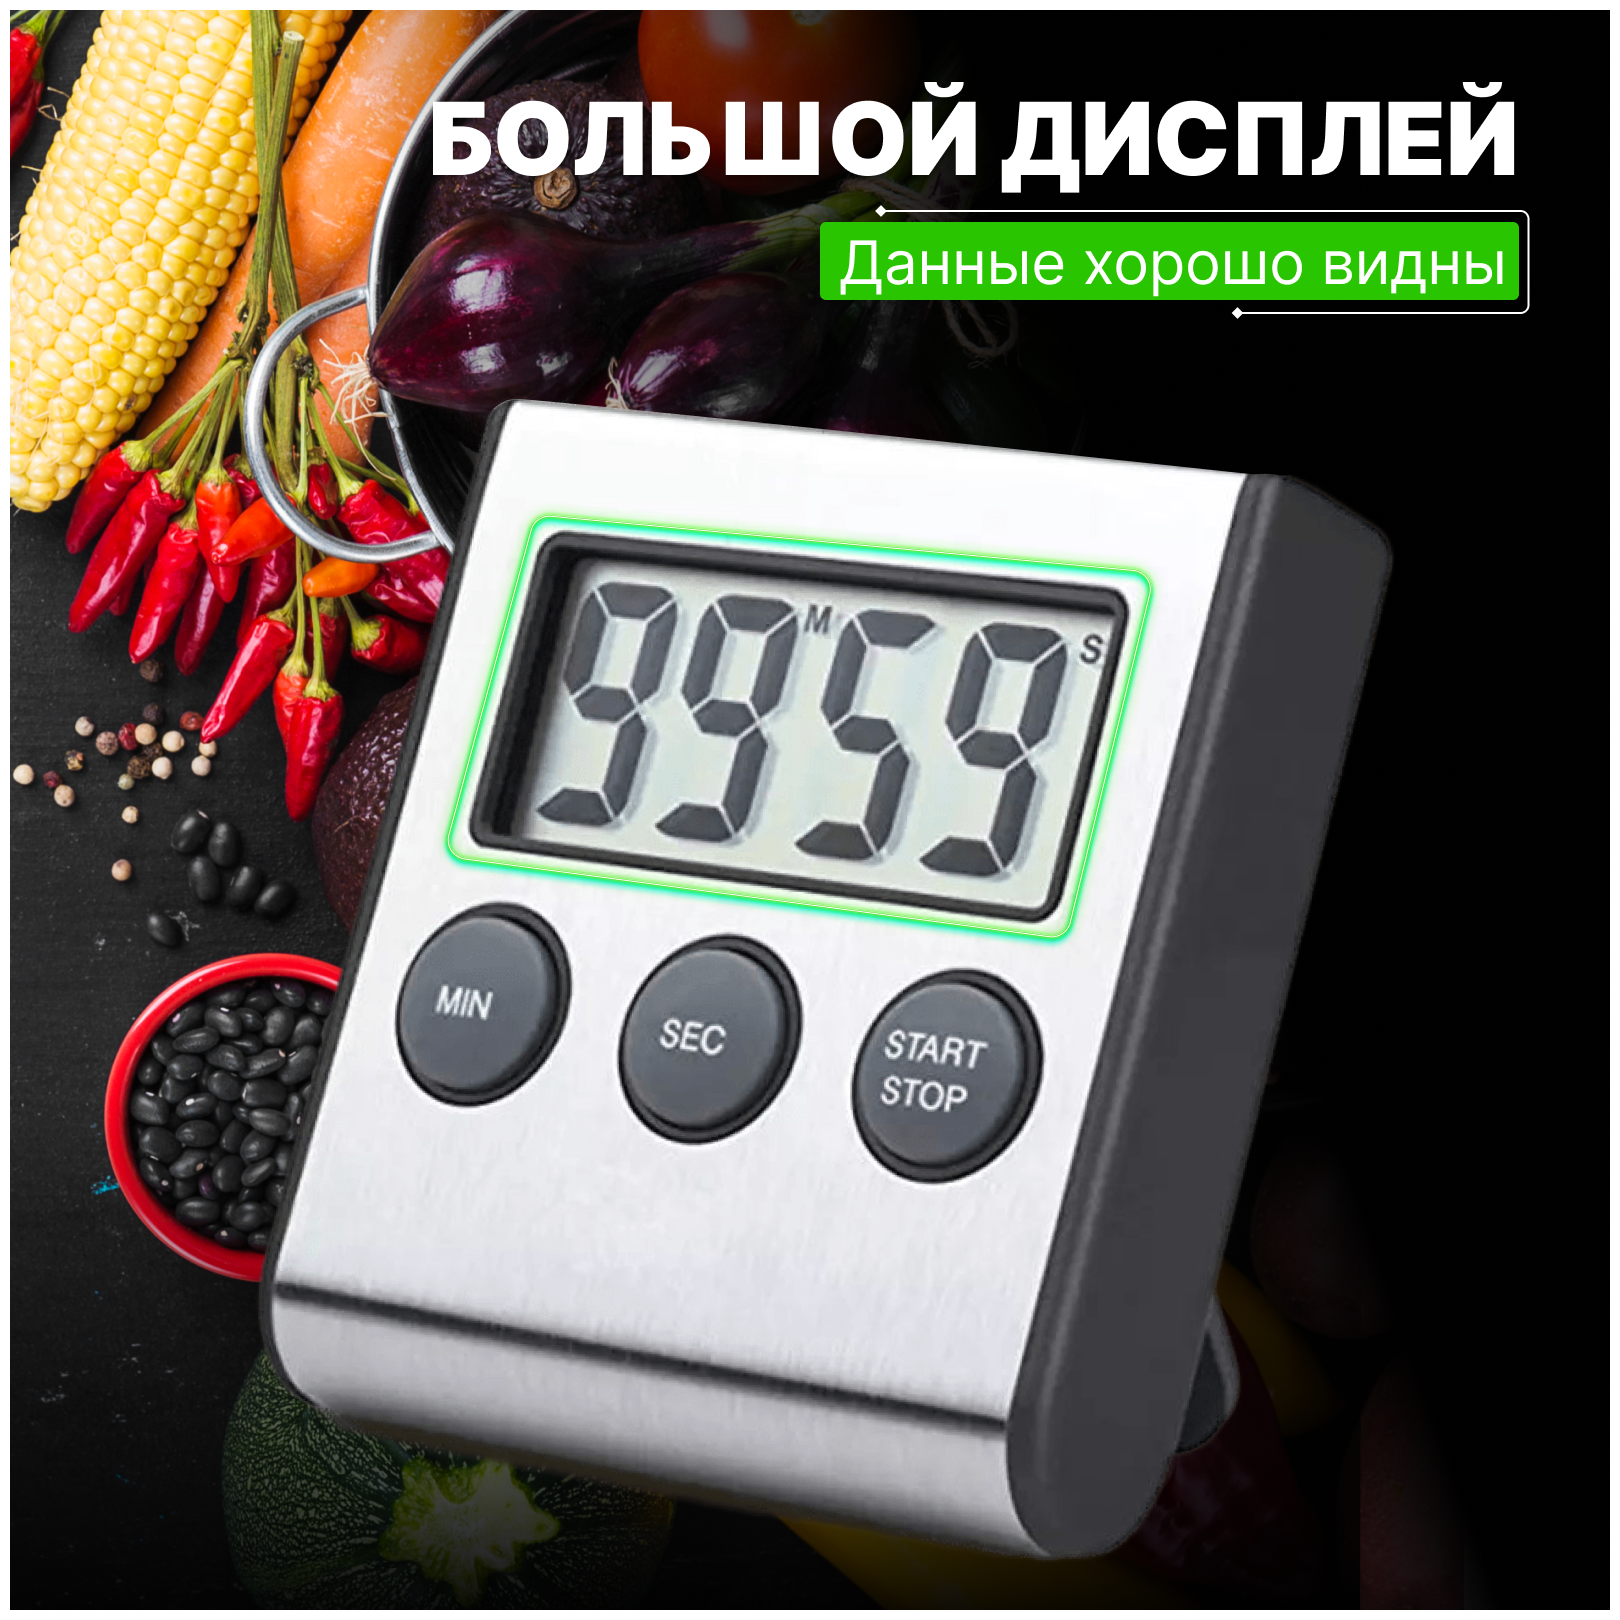 Таймер кухонный / Таймер для кухни / Таймер электронный / Хронометр / Таймер цифровой / Таймер для приготовления пищи ULBI T1